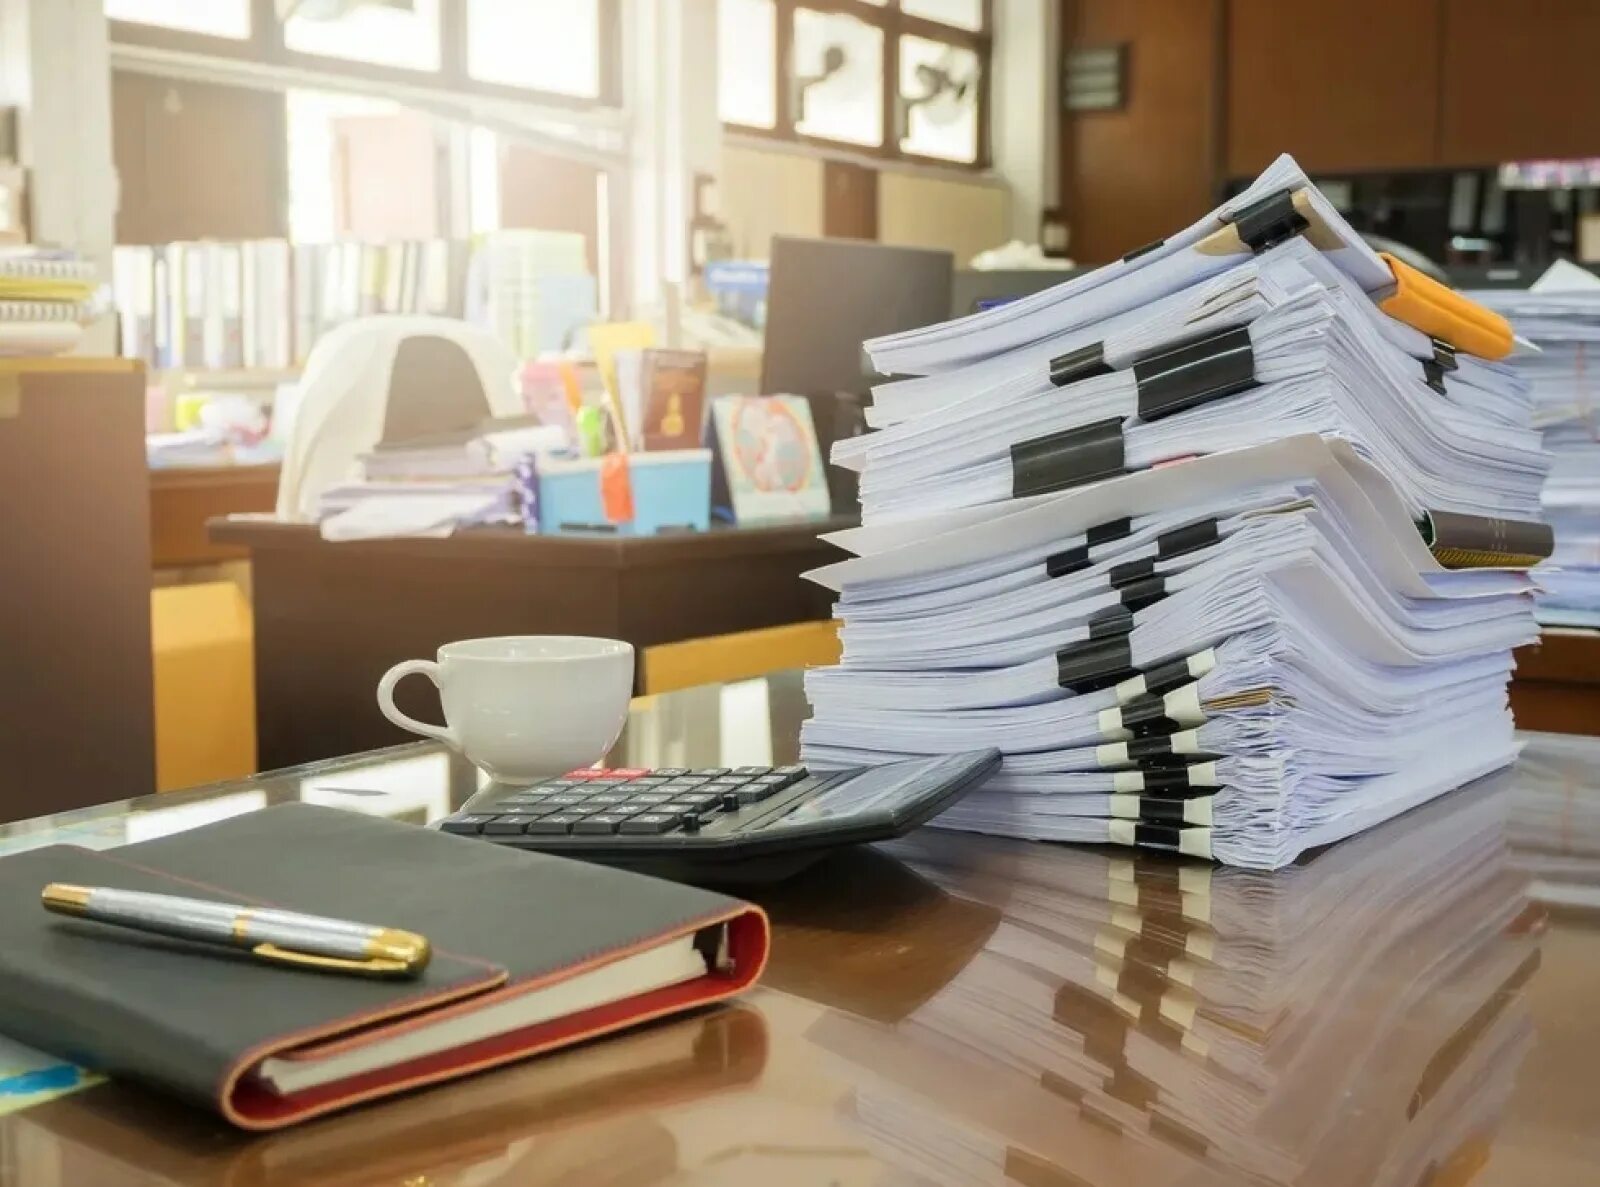 Бумаги на столе. Много бумаг на столе. Бумага для офиса. Стопка документов на столе в офисе.